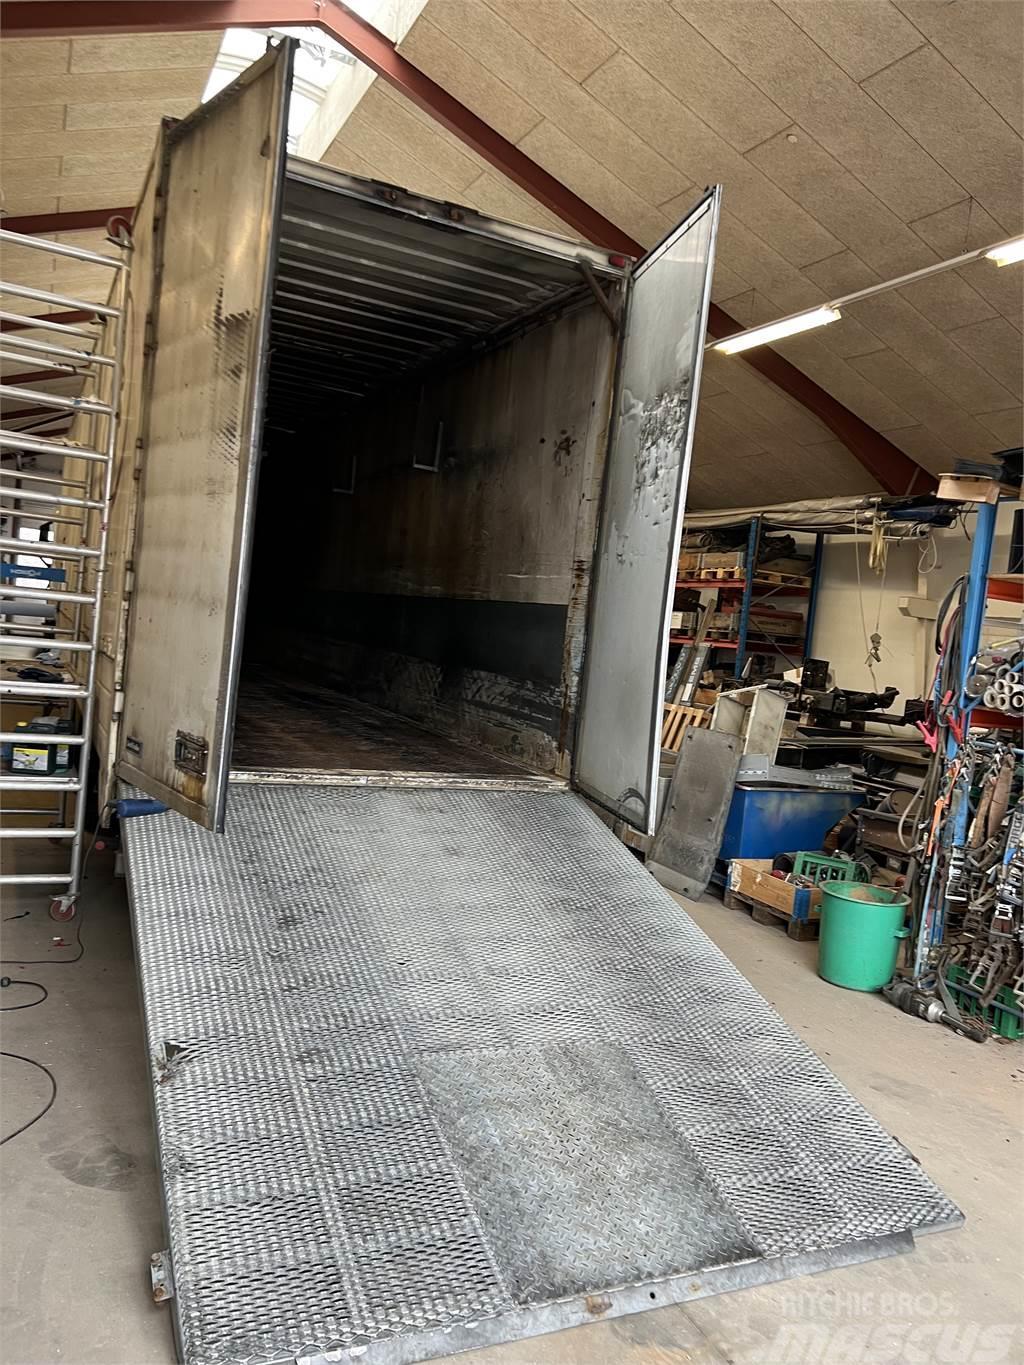 Leci 13,6 mtr. box læsserampe Vehicle transport semi-trailers